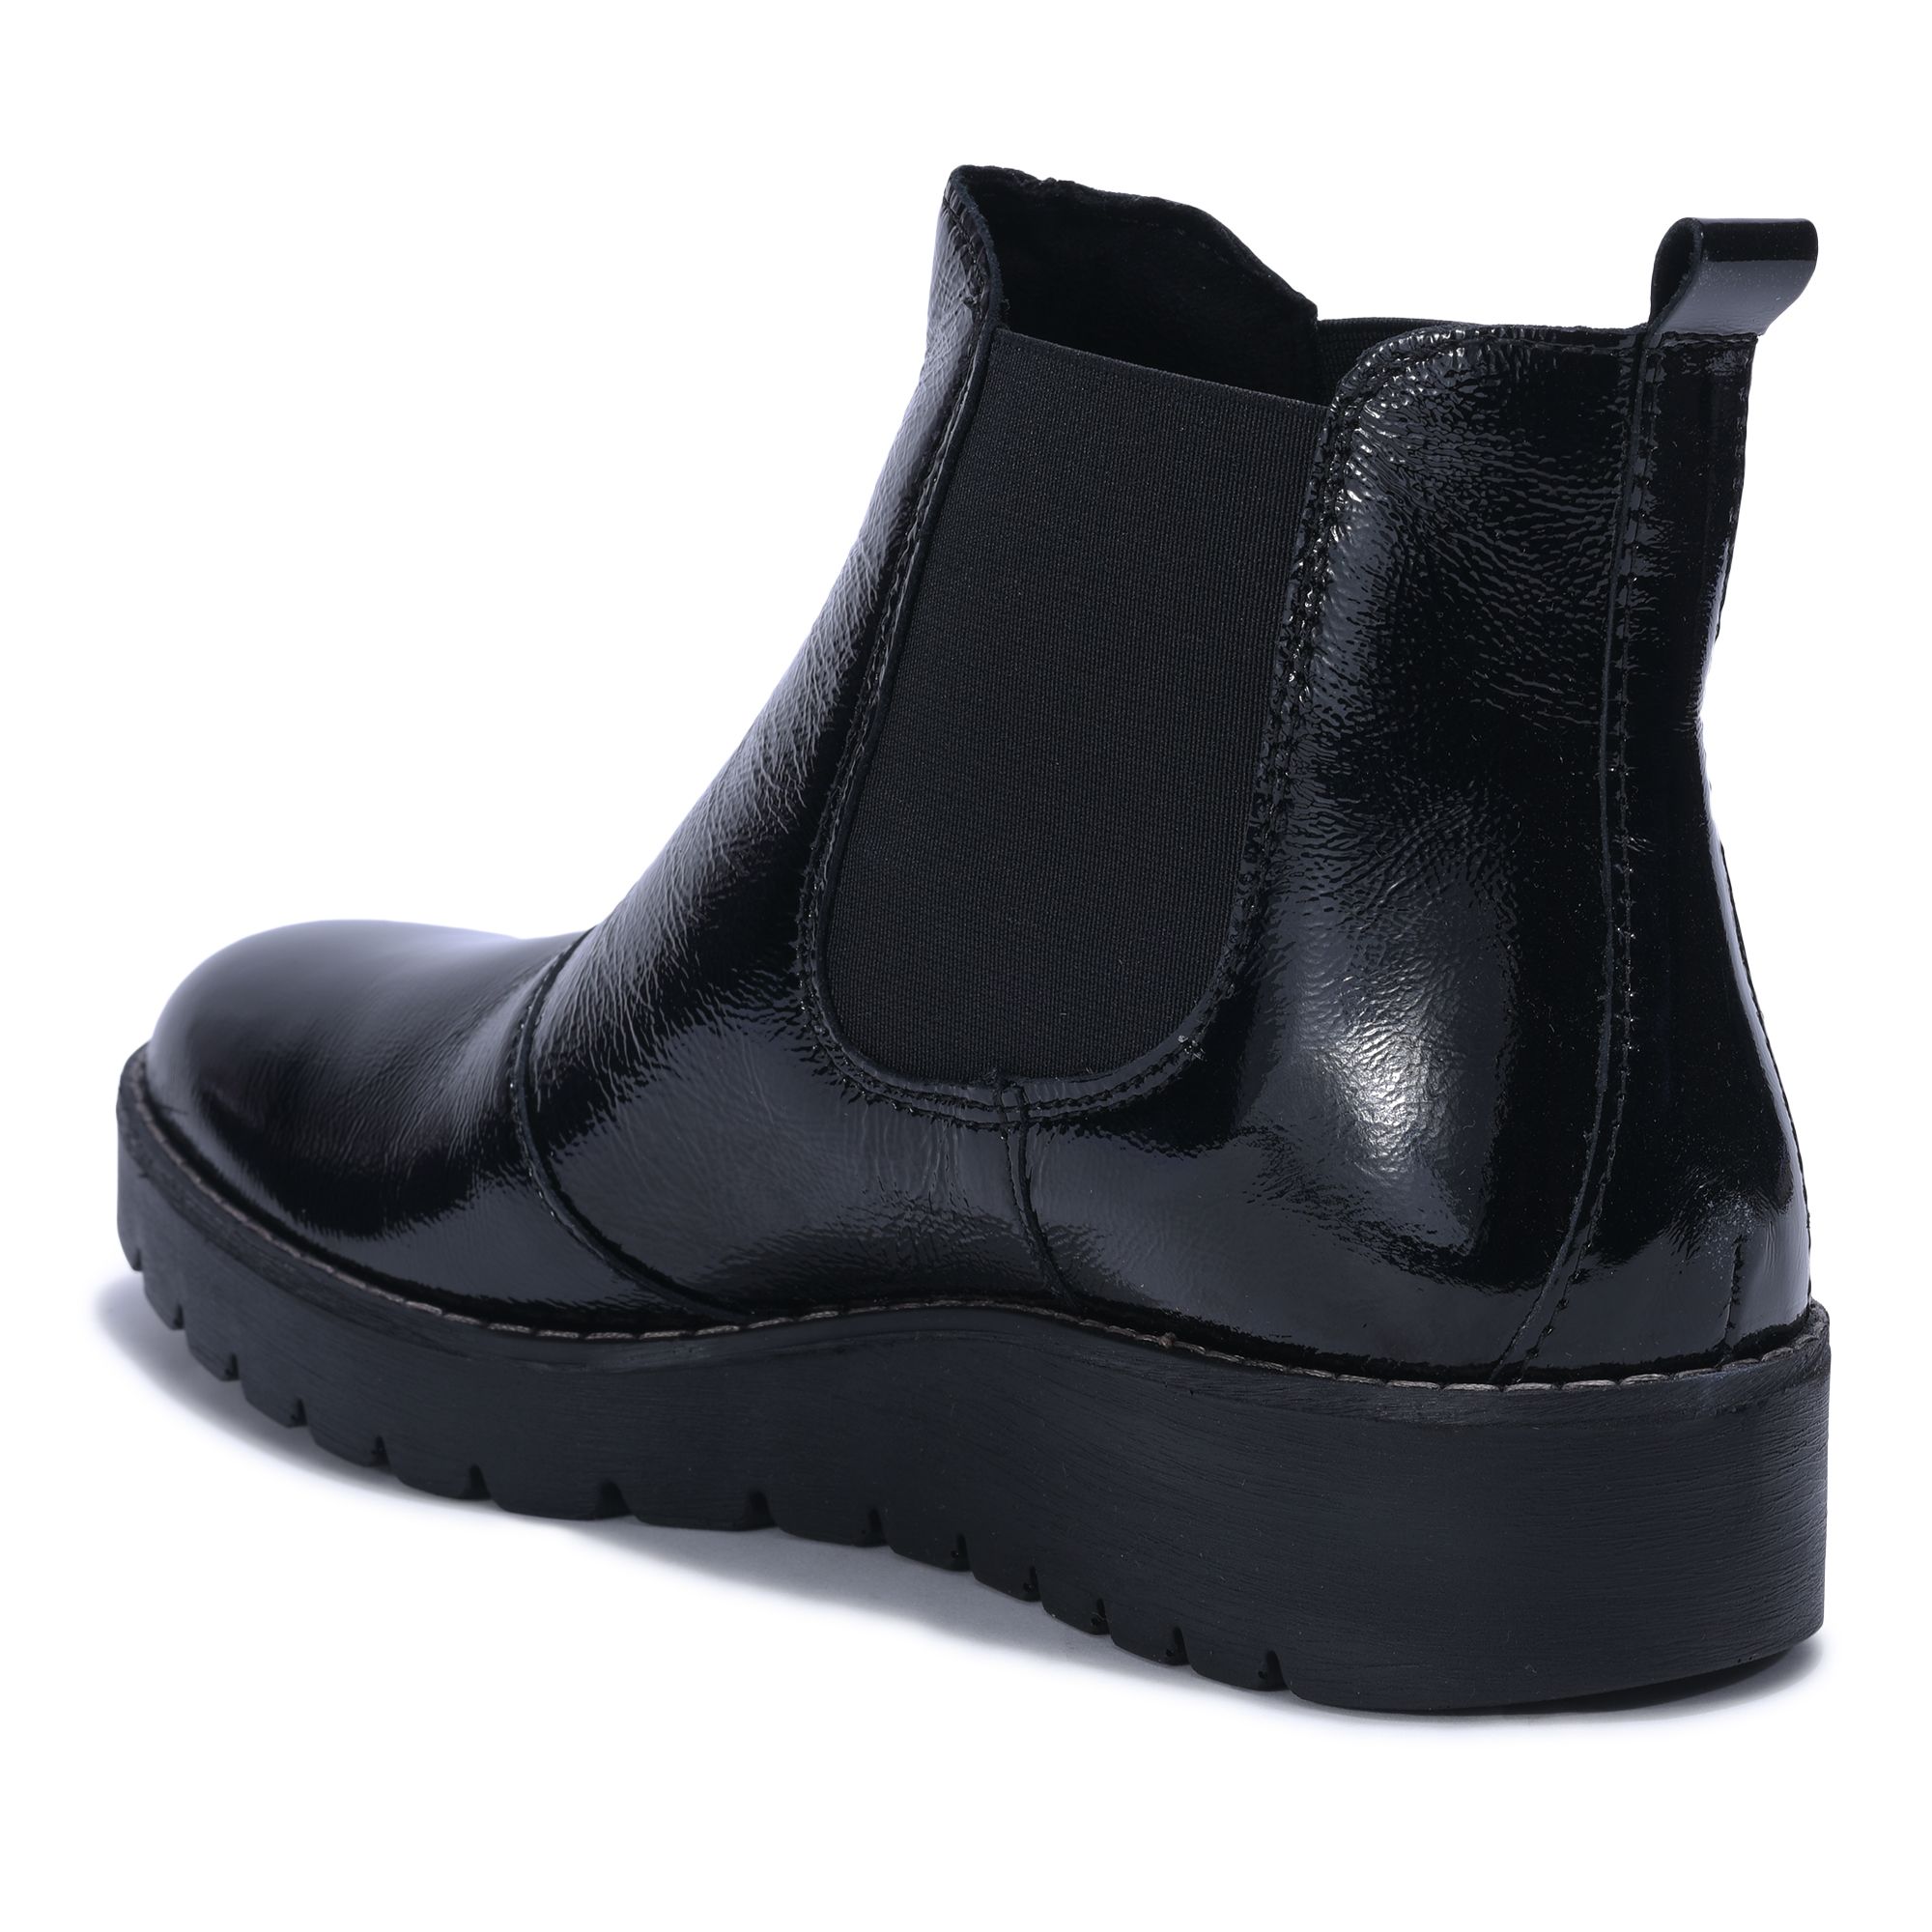 Black Chelsea boot